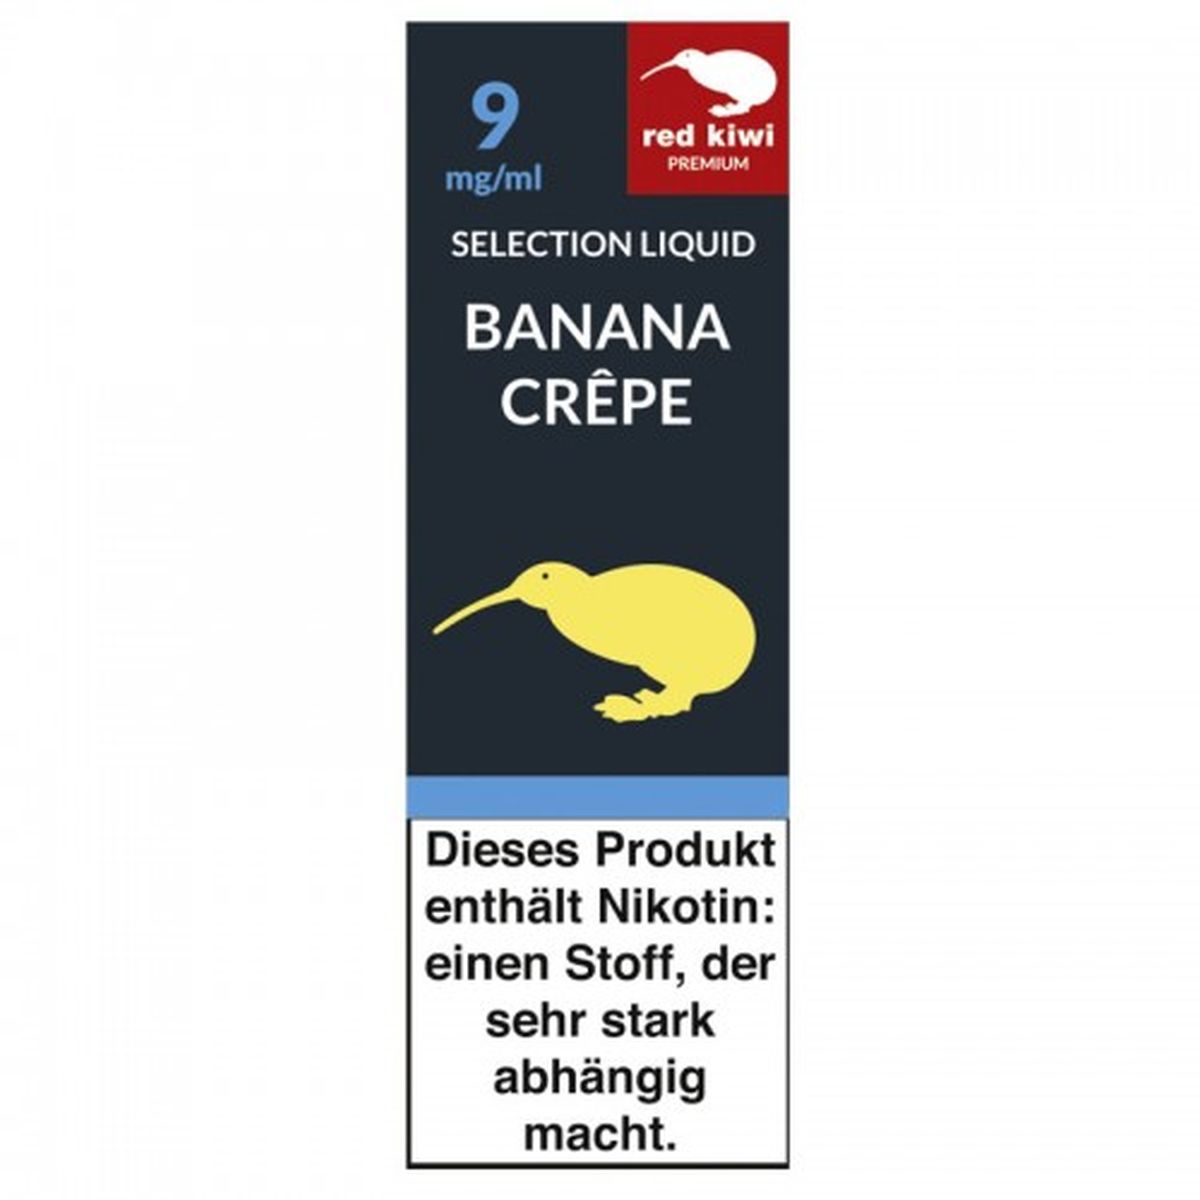 Red Kiwi Red Kiwi eLiquid Selection Banana Crepe 9mg Nikotin/ml bei www.Tabakring.de kaufen